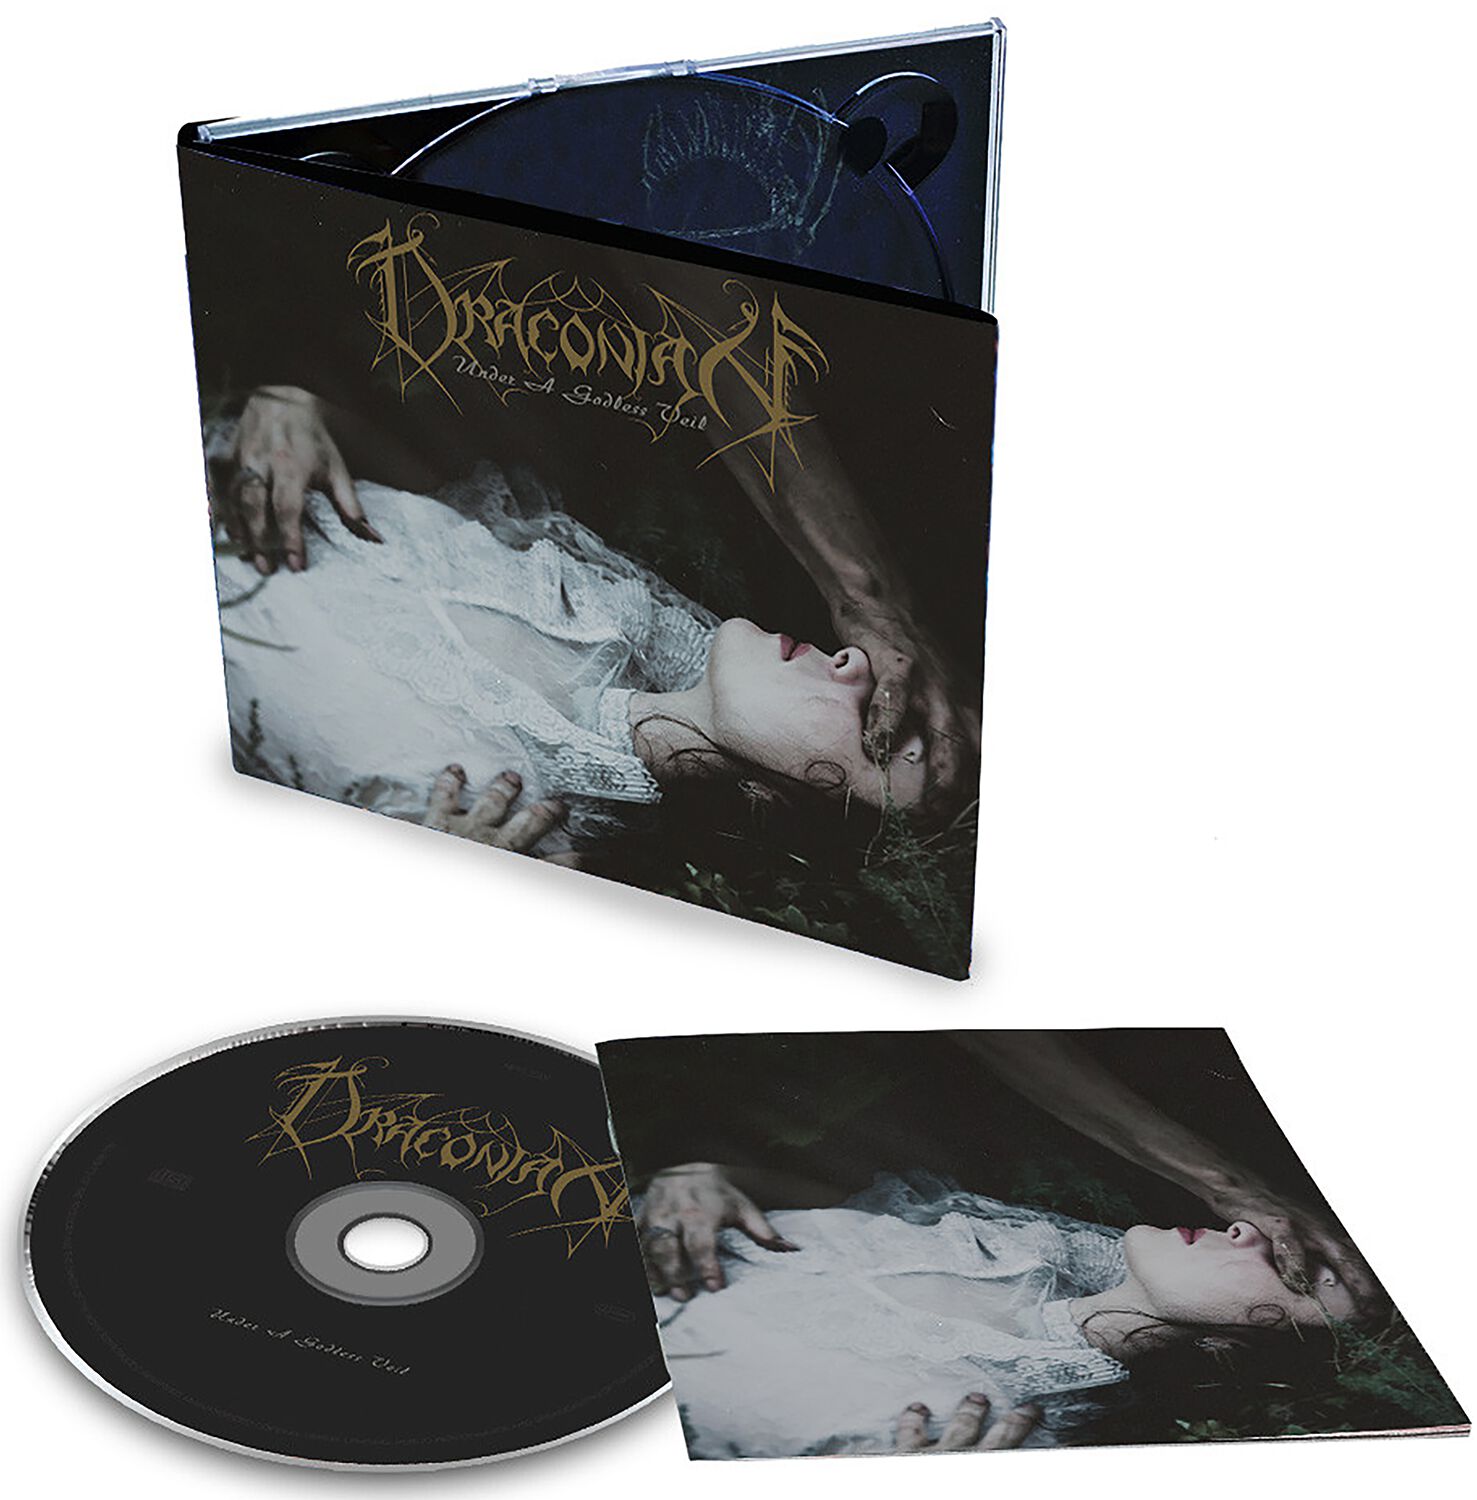 Image of Draconian Under a godless veil CD Standard